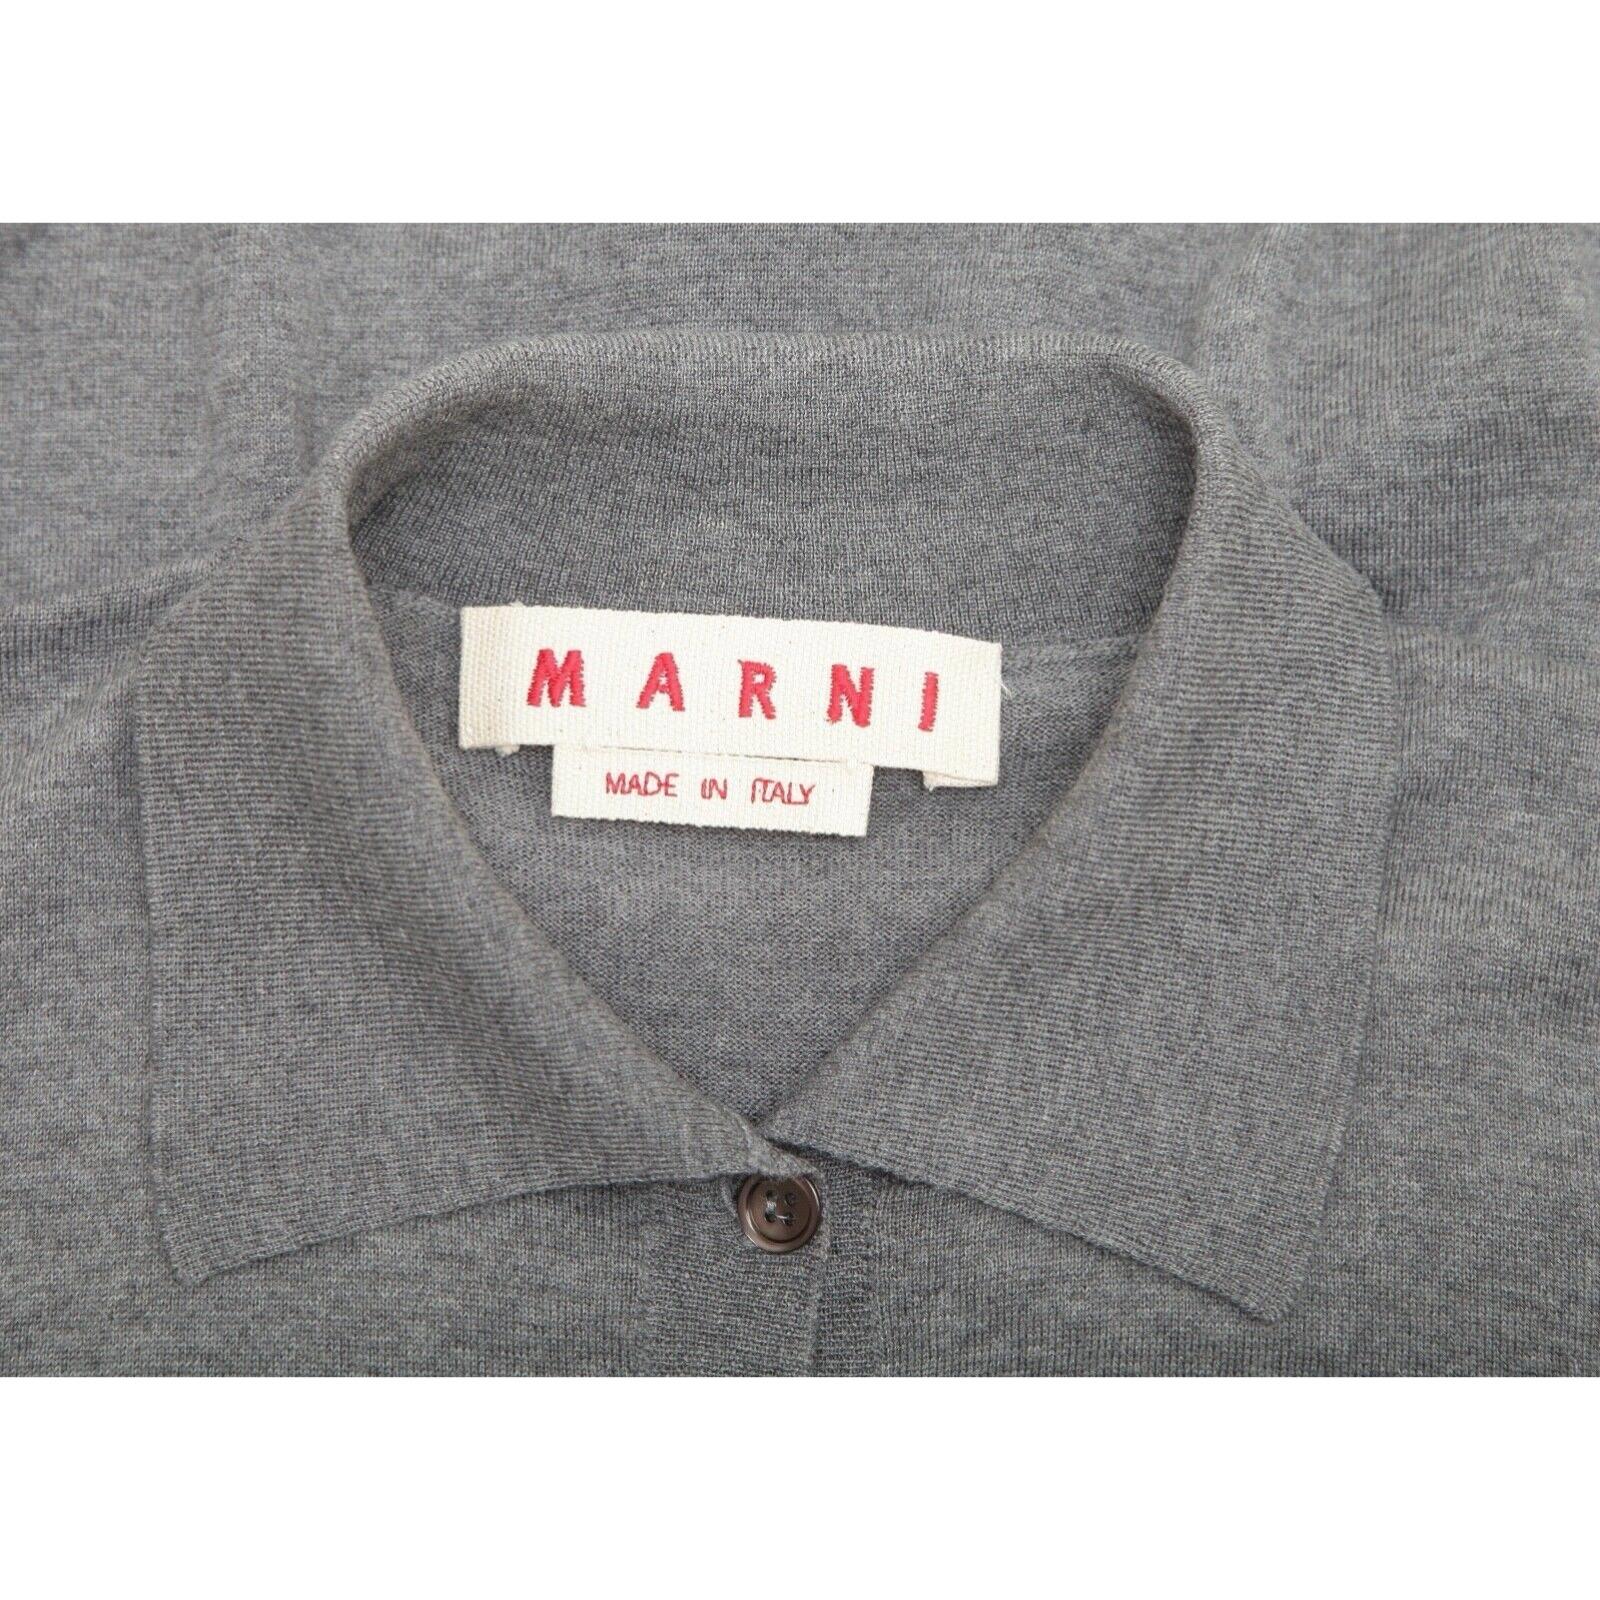 MARNI Sweater Cardigan Knit Top Grey Wool Collar Long Sleeve Button 36 2